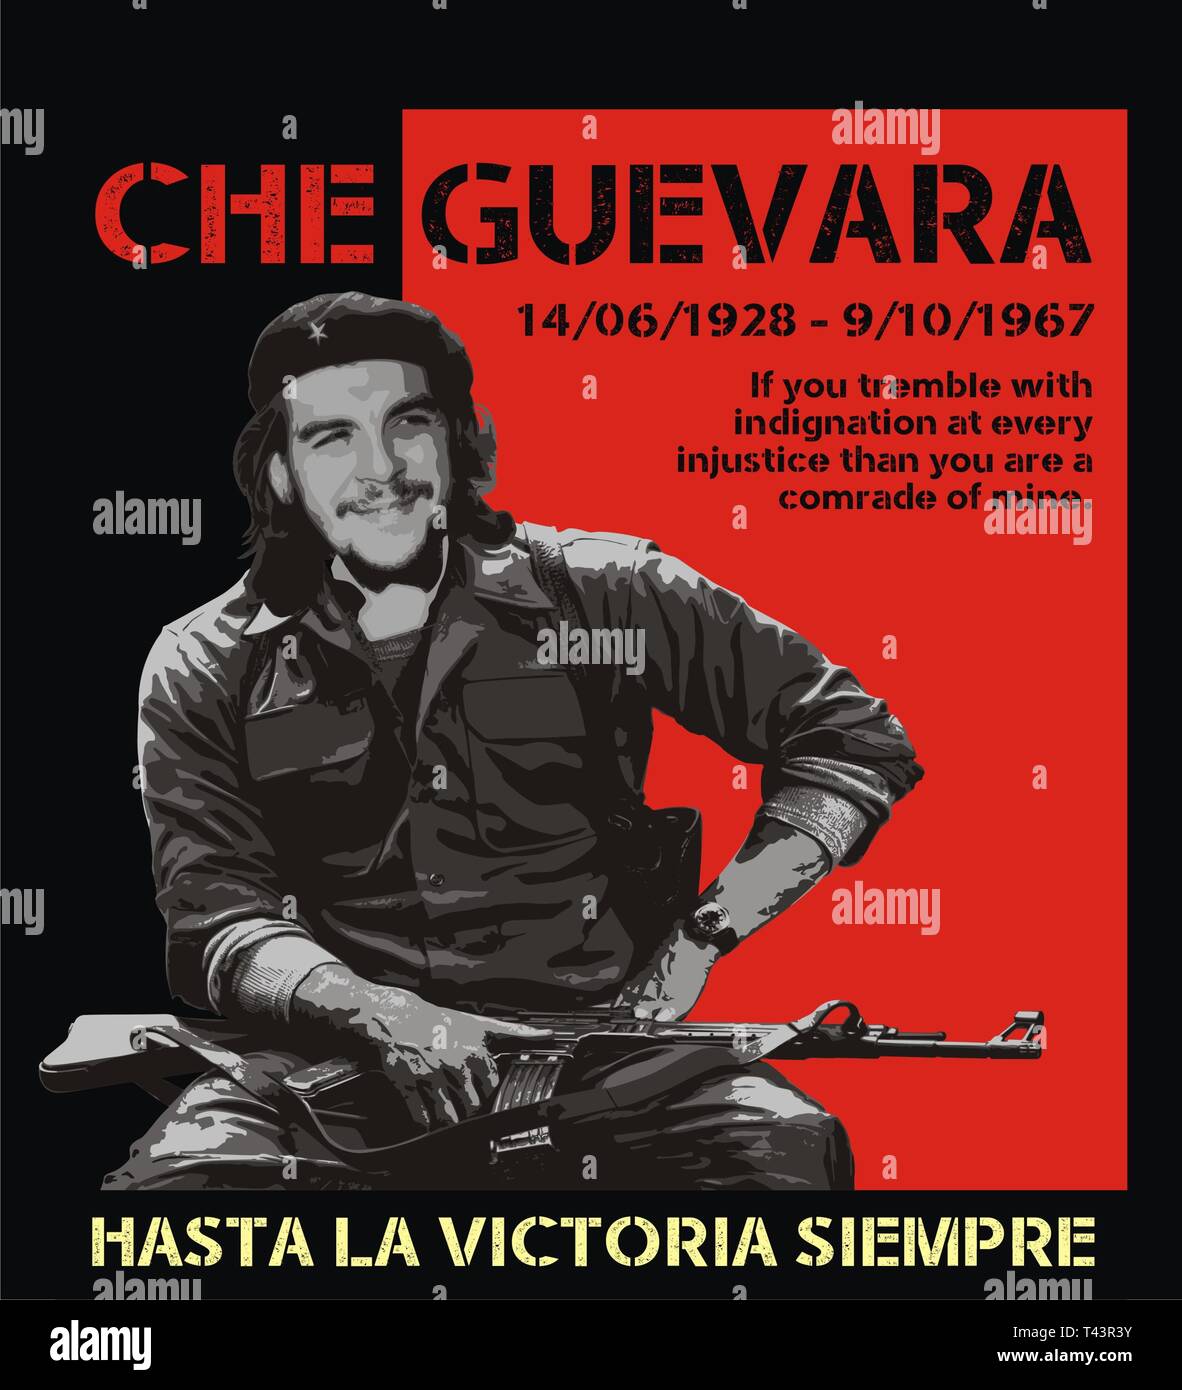 Che Guevara illustration Stock Photo